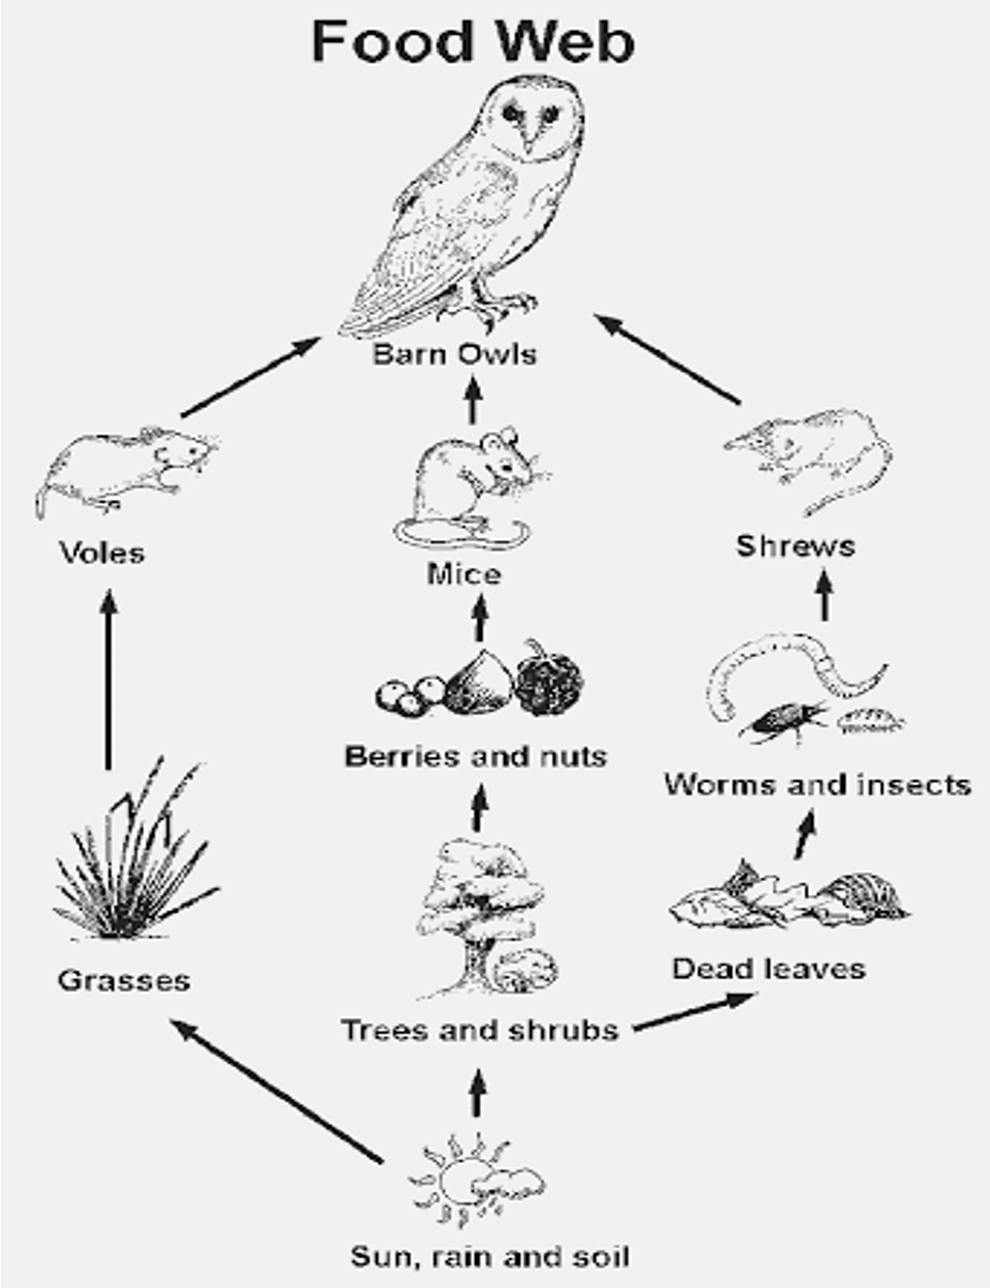 Foodweb of a common barn owl. [Click here for source](http://web2.utc.edu/~fbp972/educ575/wq04MichaelKavur/DPMichaelKavur.htm)